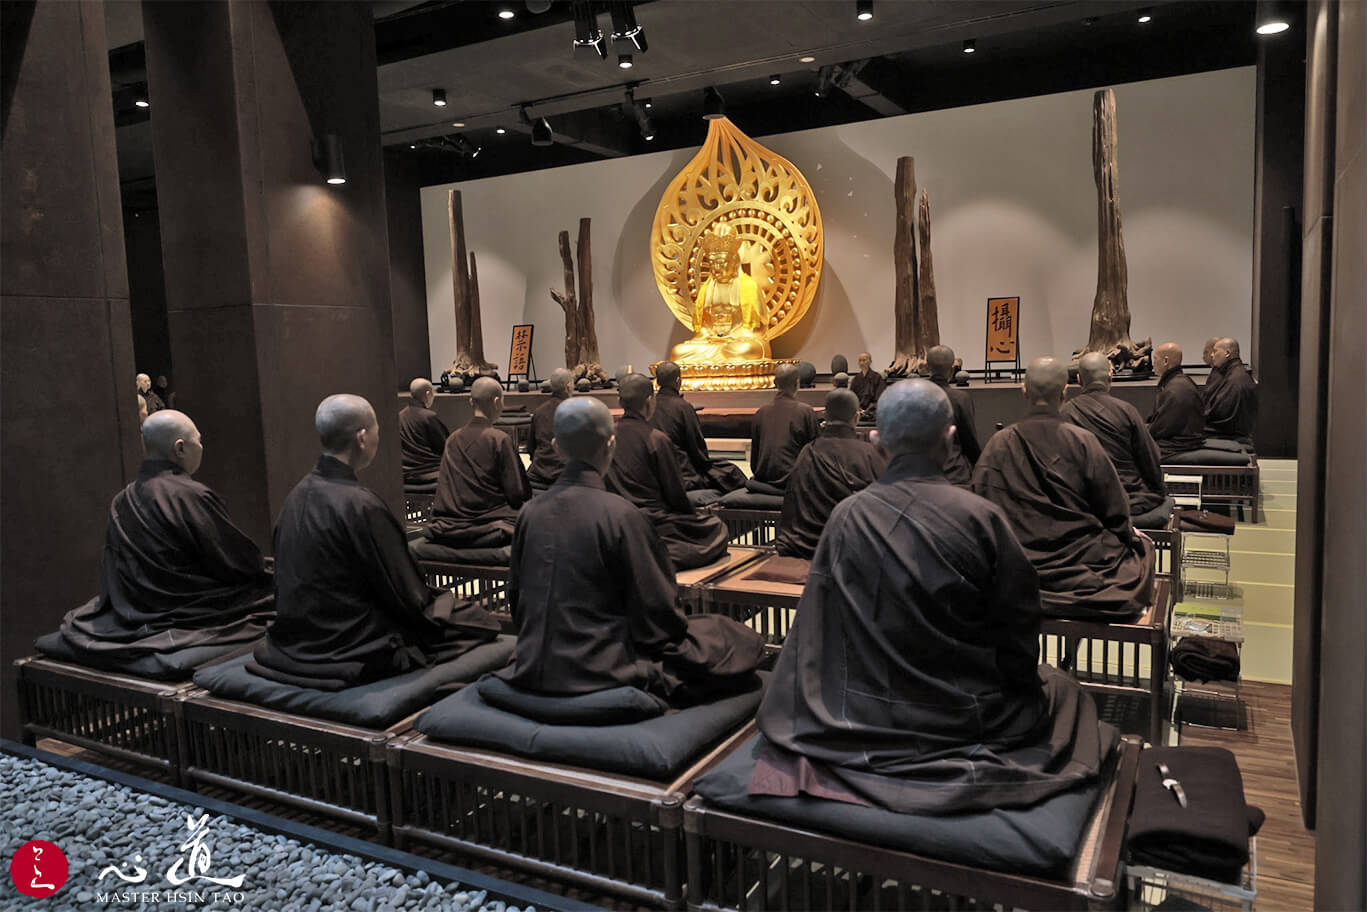 2021 Spring Term Monastic Retreat – The Original Face of Awareness -MasterHsinTao